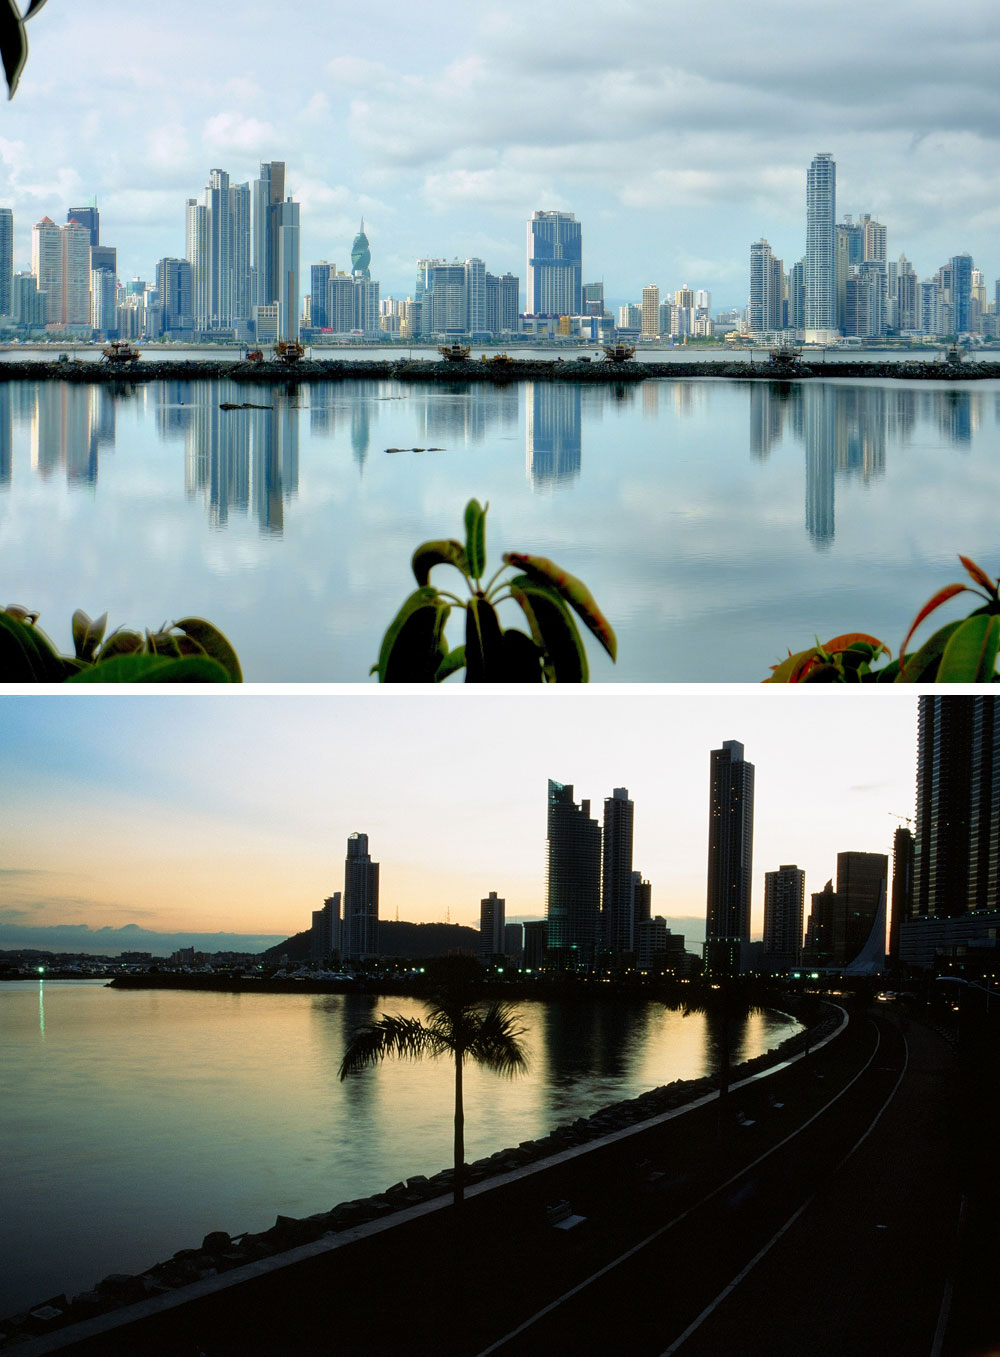 Fakta: Cirka 40% av Panamas befolkning bor i Panama City